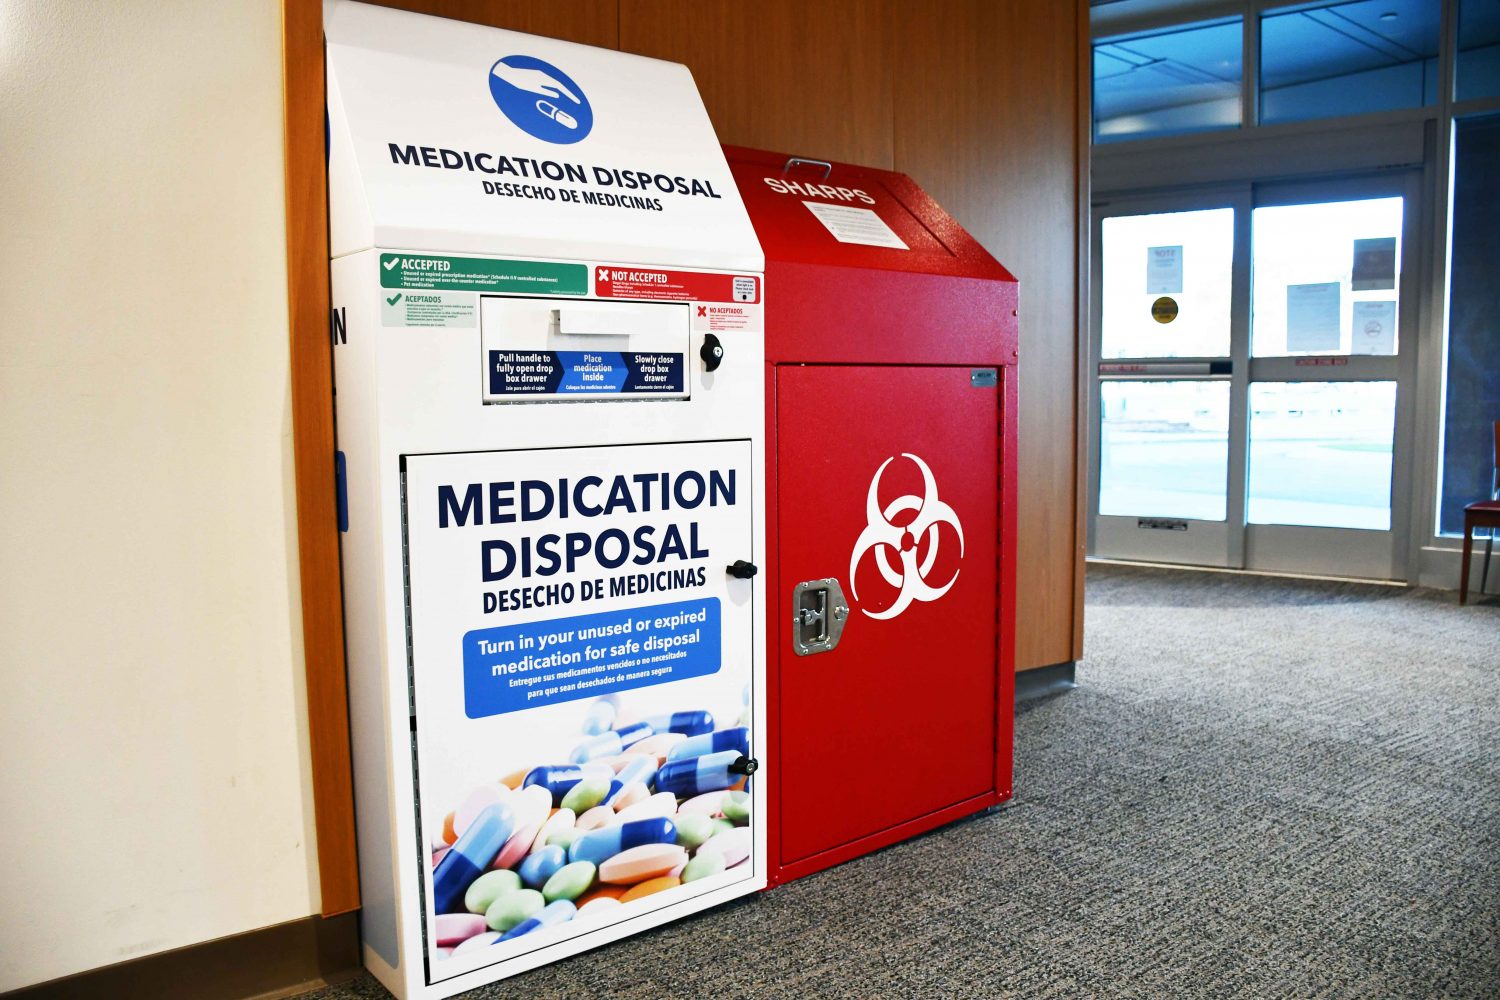 Aspirus Wausau Hospital installs public medication disposal bin